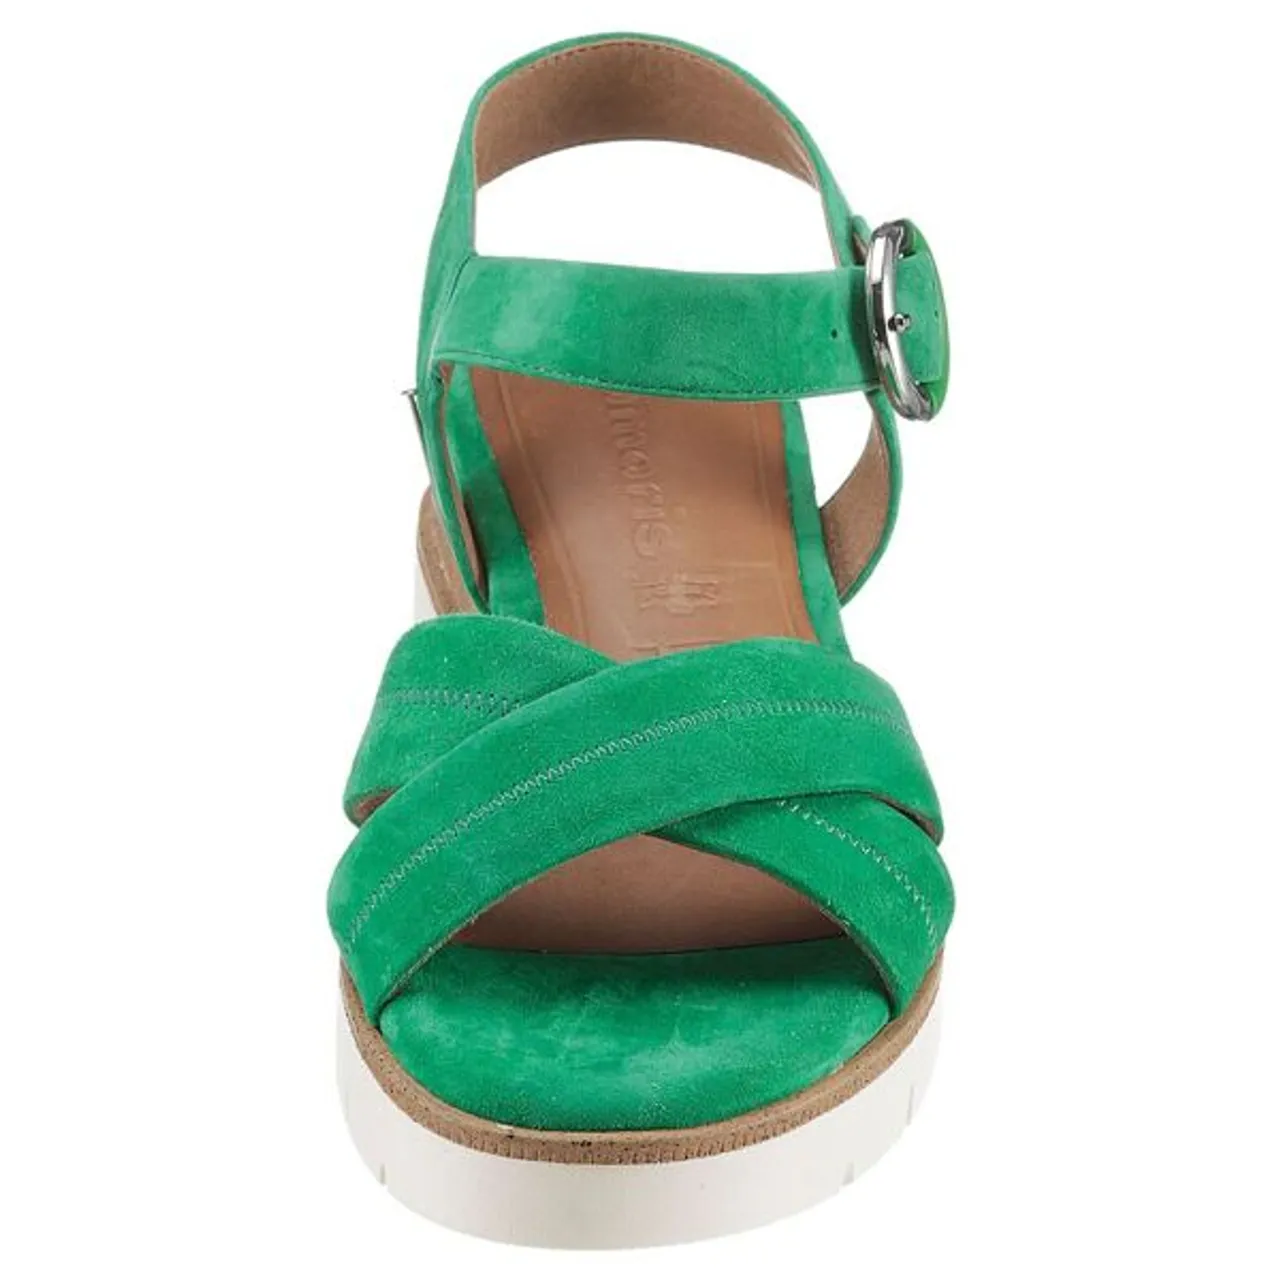 Sandalette TAMARIS Gr. 38, grün Damen Schuhe Sandaletten